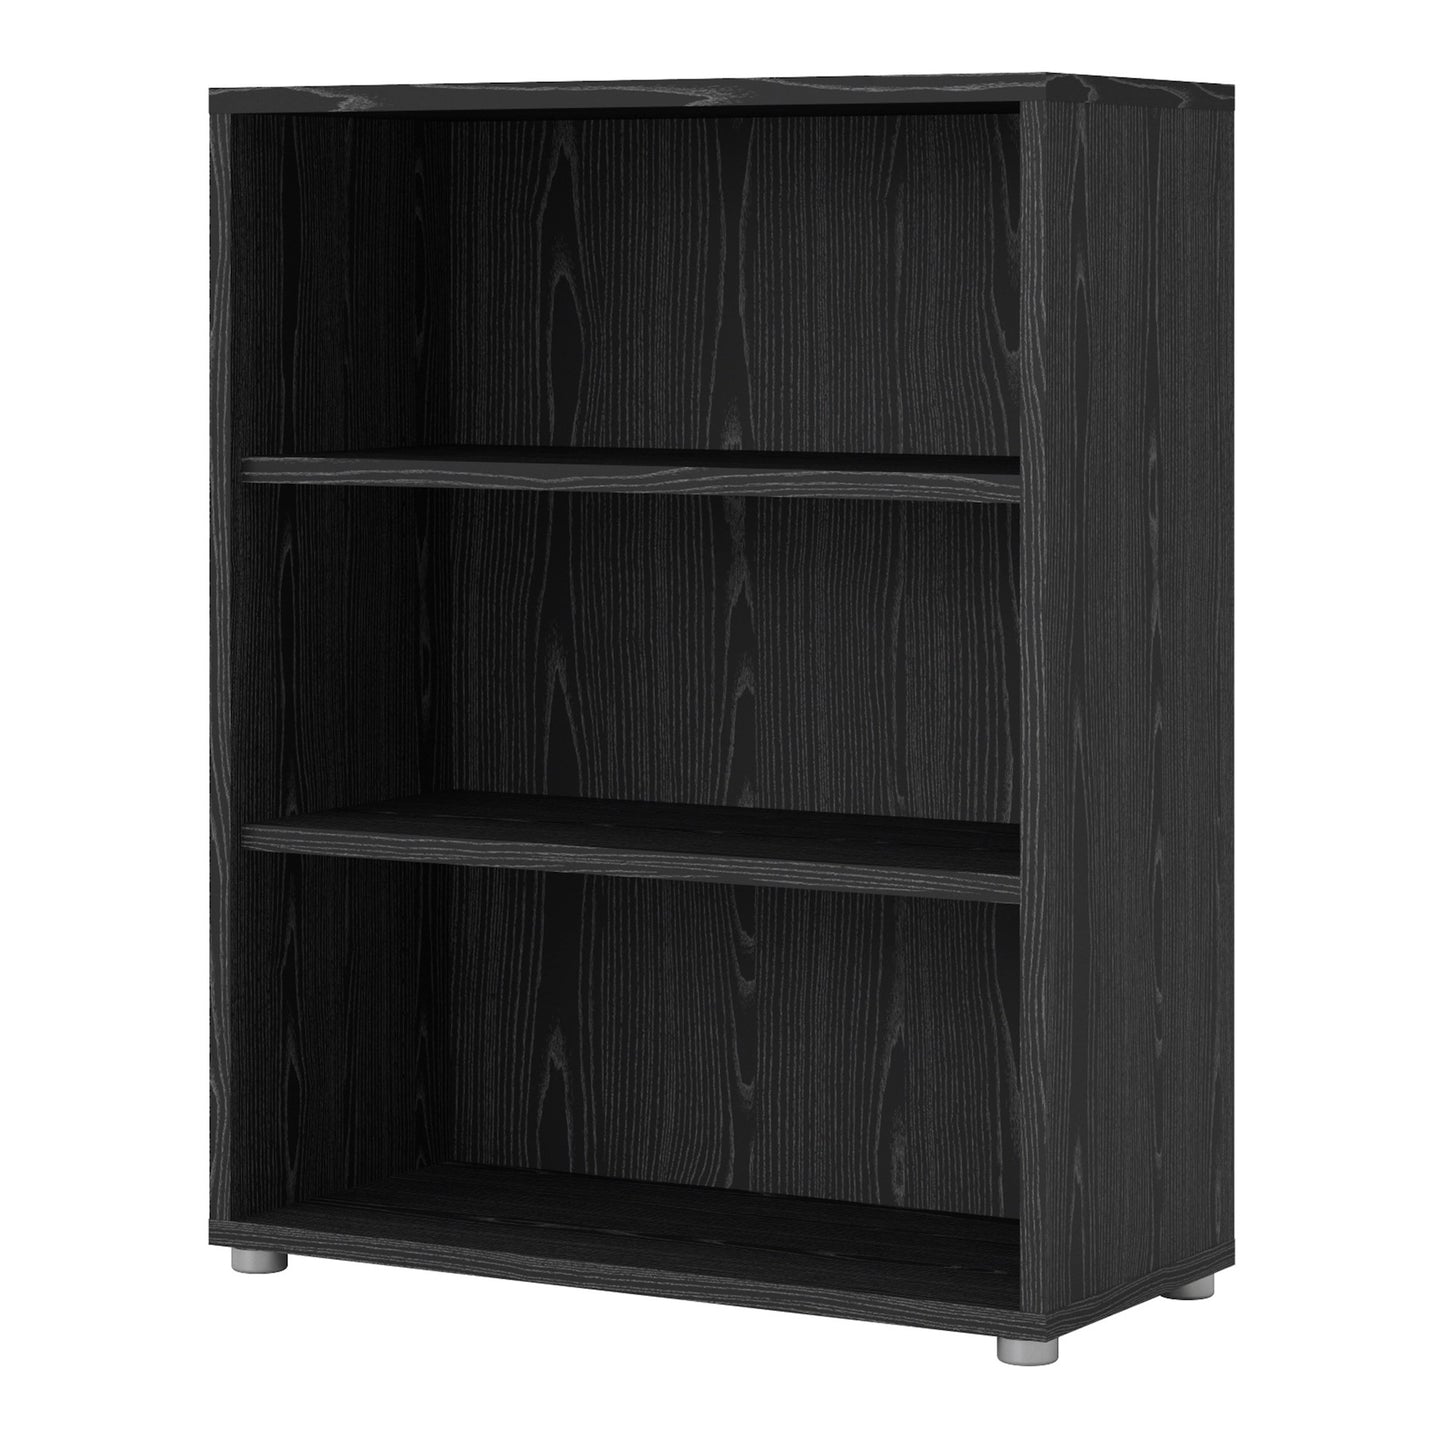 Furniture To Go Prima Bookcase 2 Shelves in Black Woodgrain